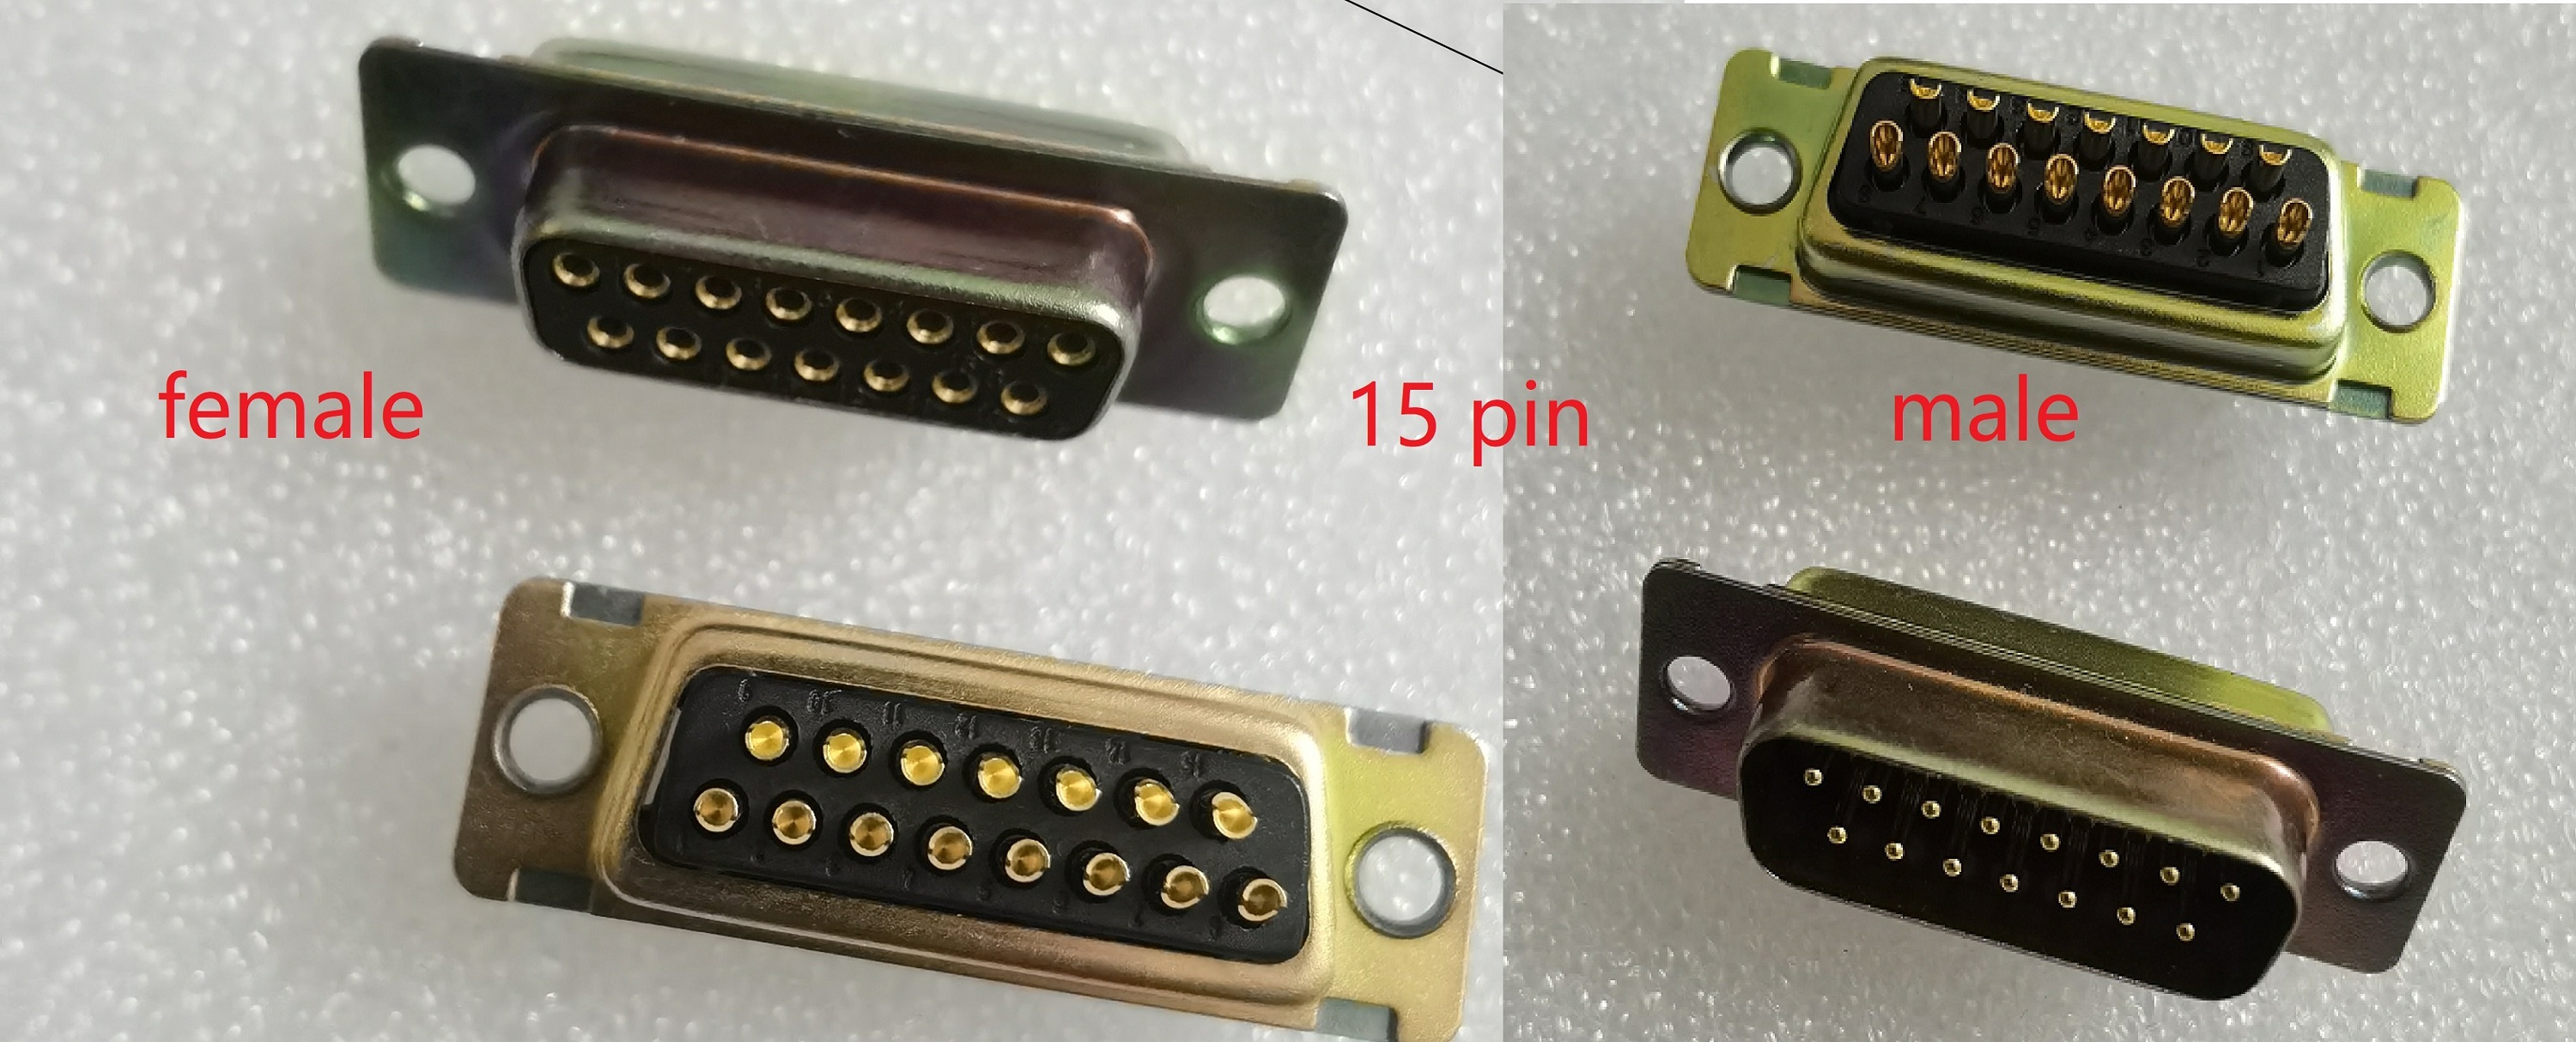 D-sub rectangular connector 15pin male 15pin female connector salt spray 500H